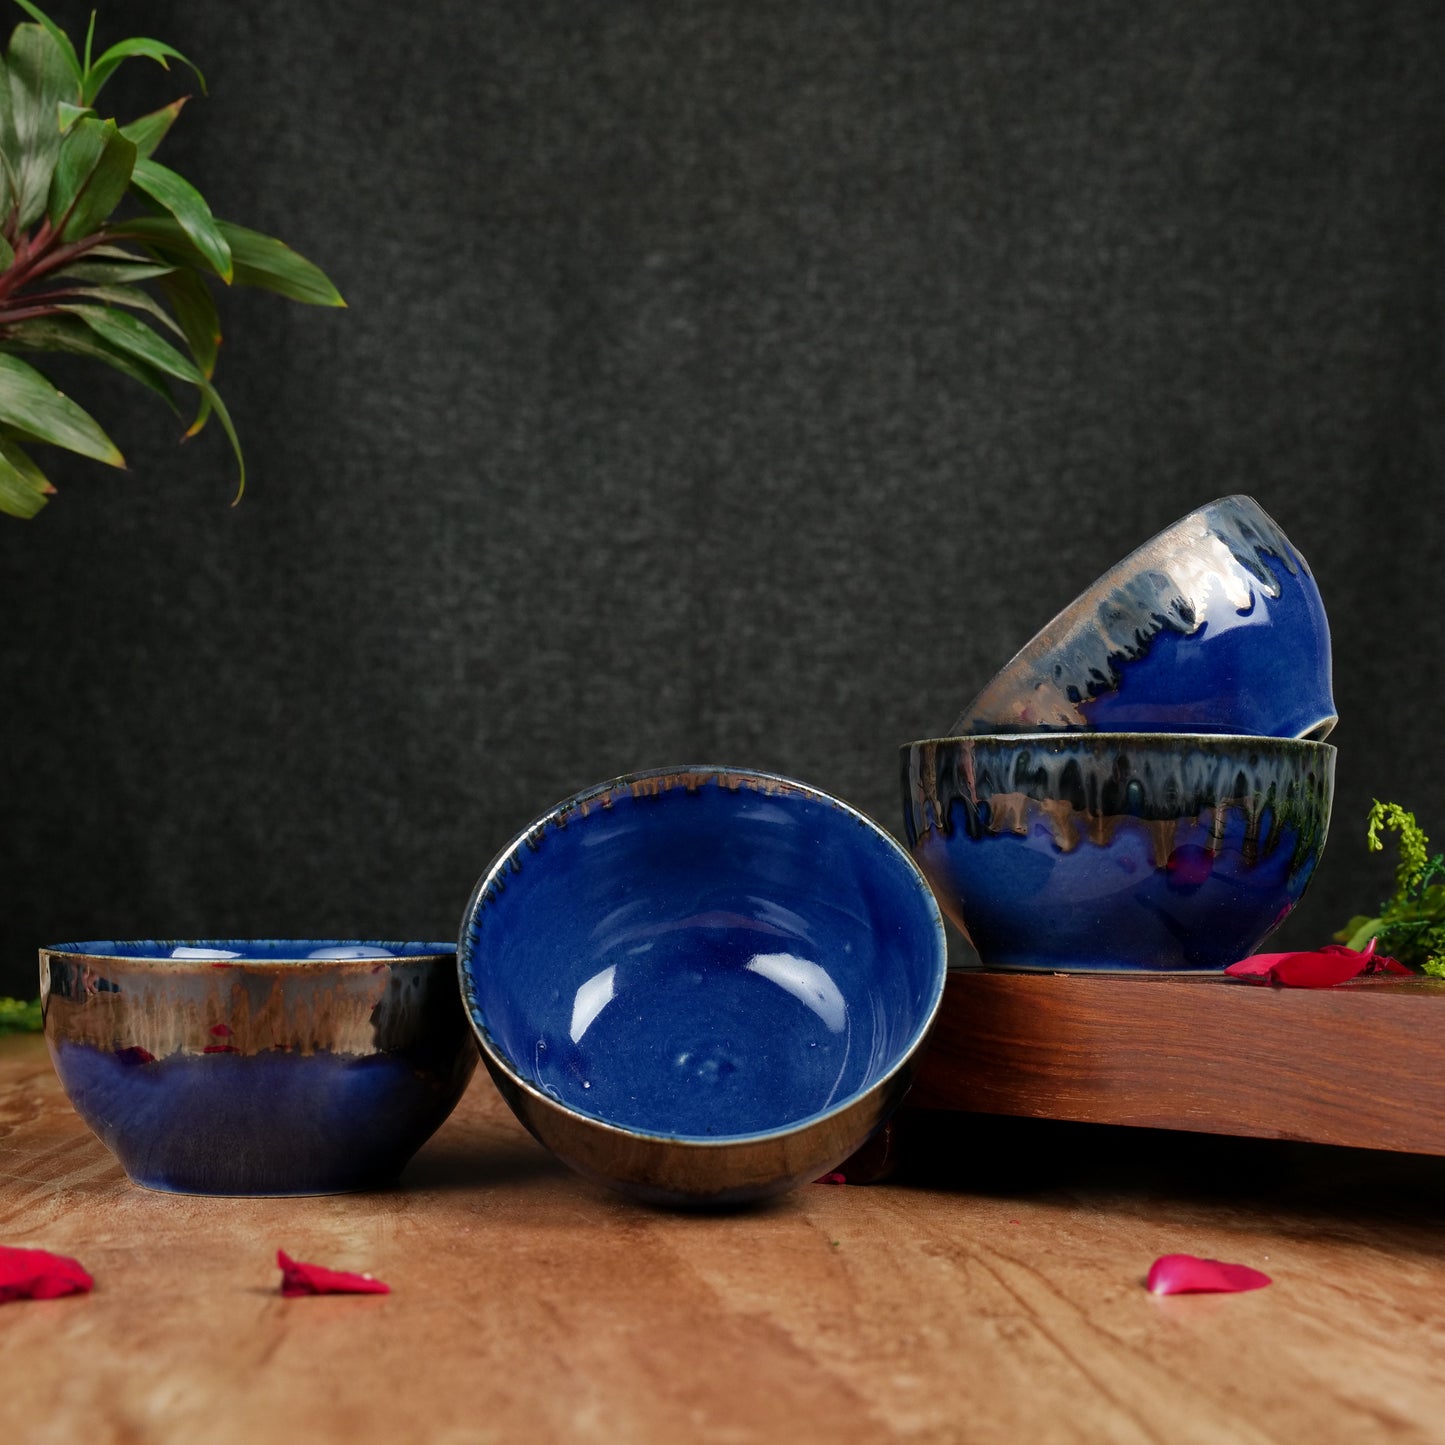 Artysta 'Dark Drips' Ceramic Studio Pottery Dining Bowls/Katoris (Set of 4) - artystagallery